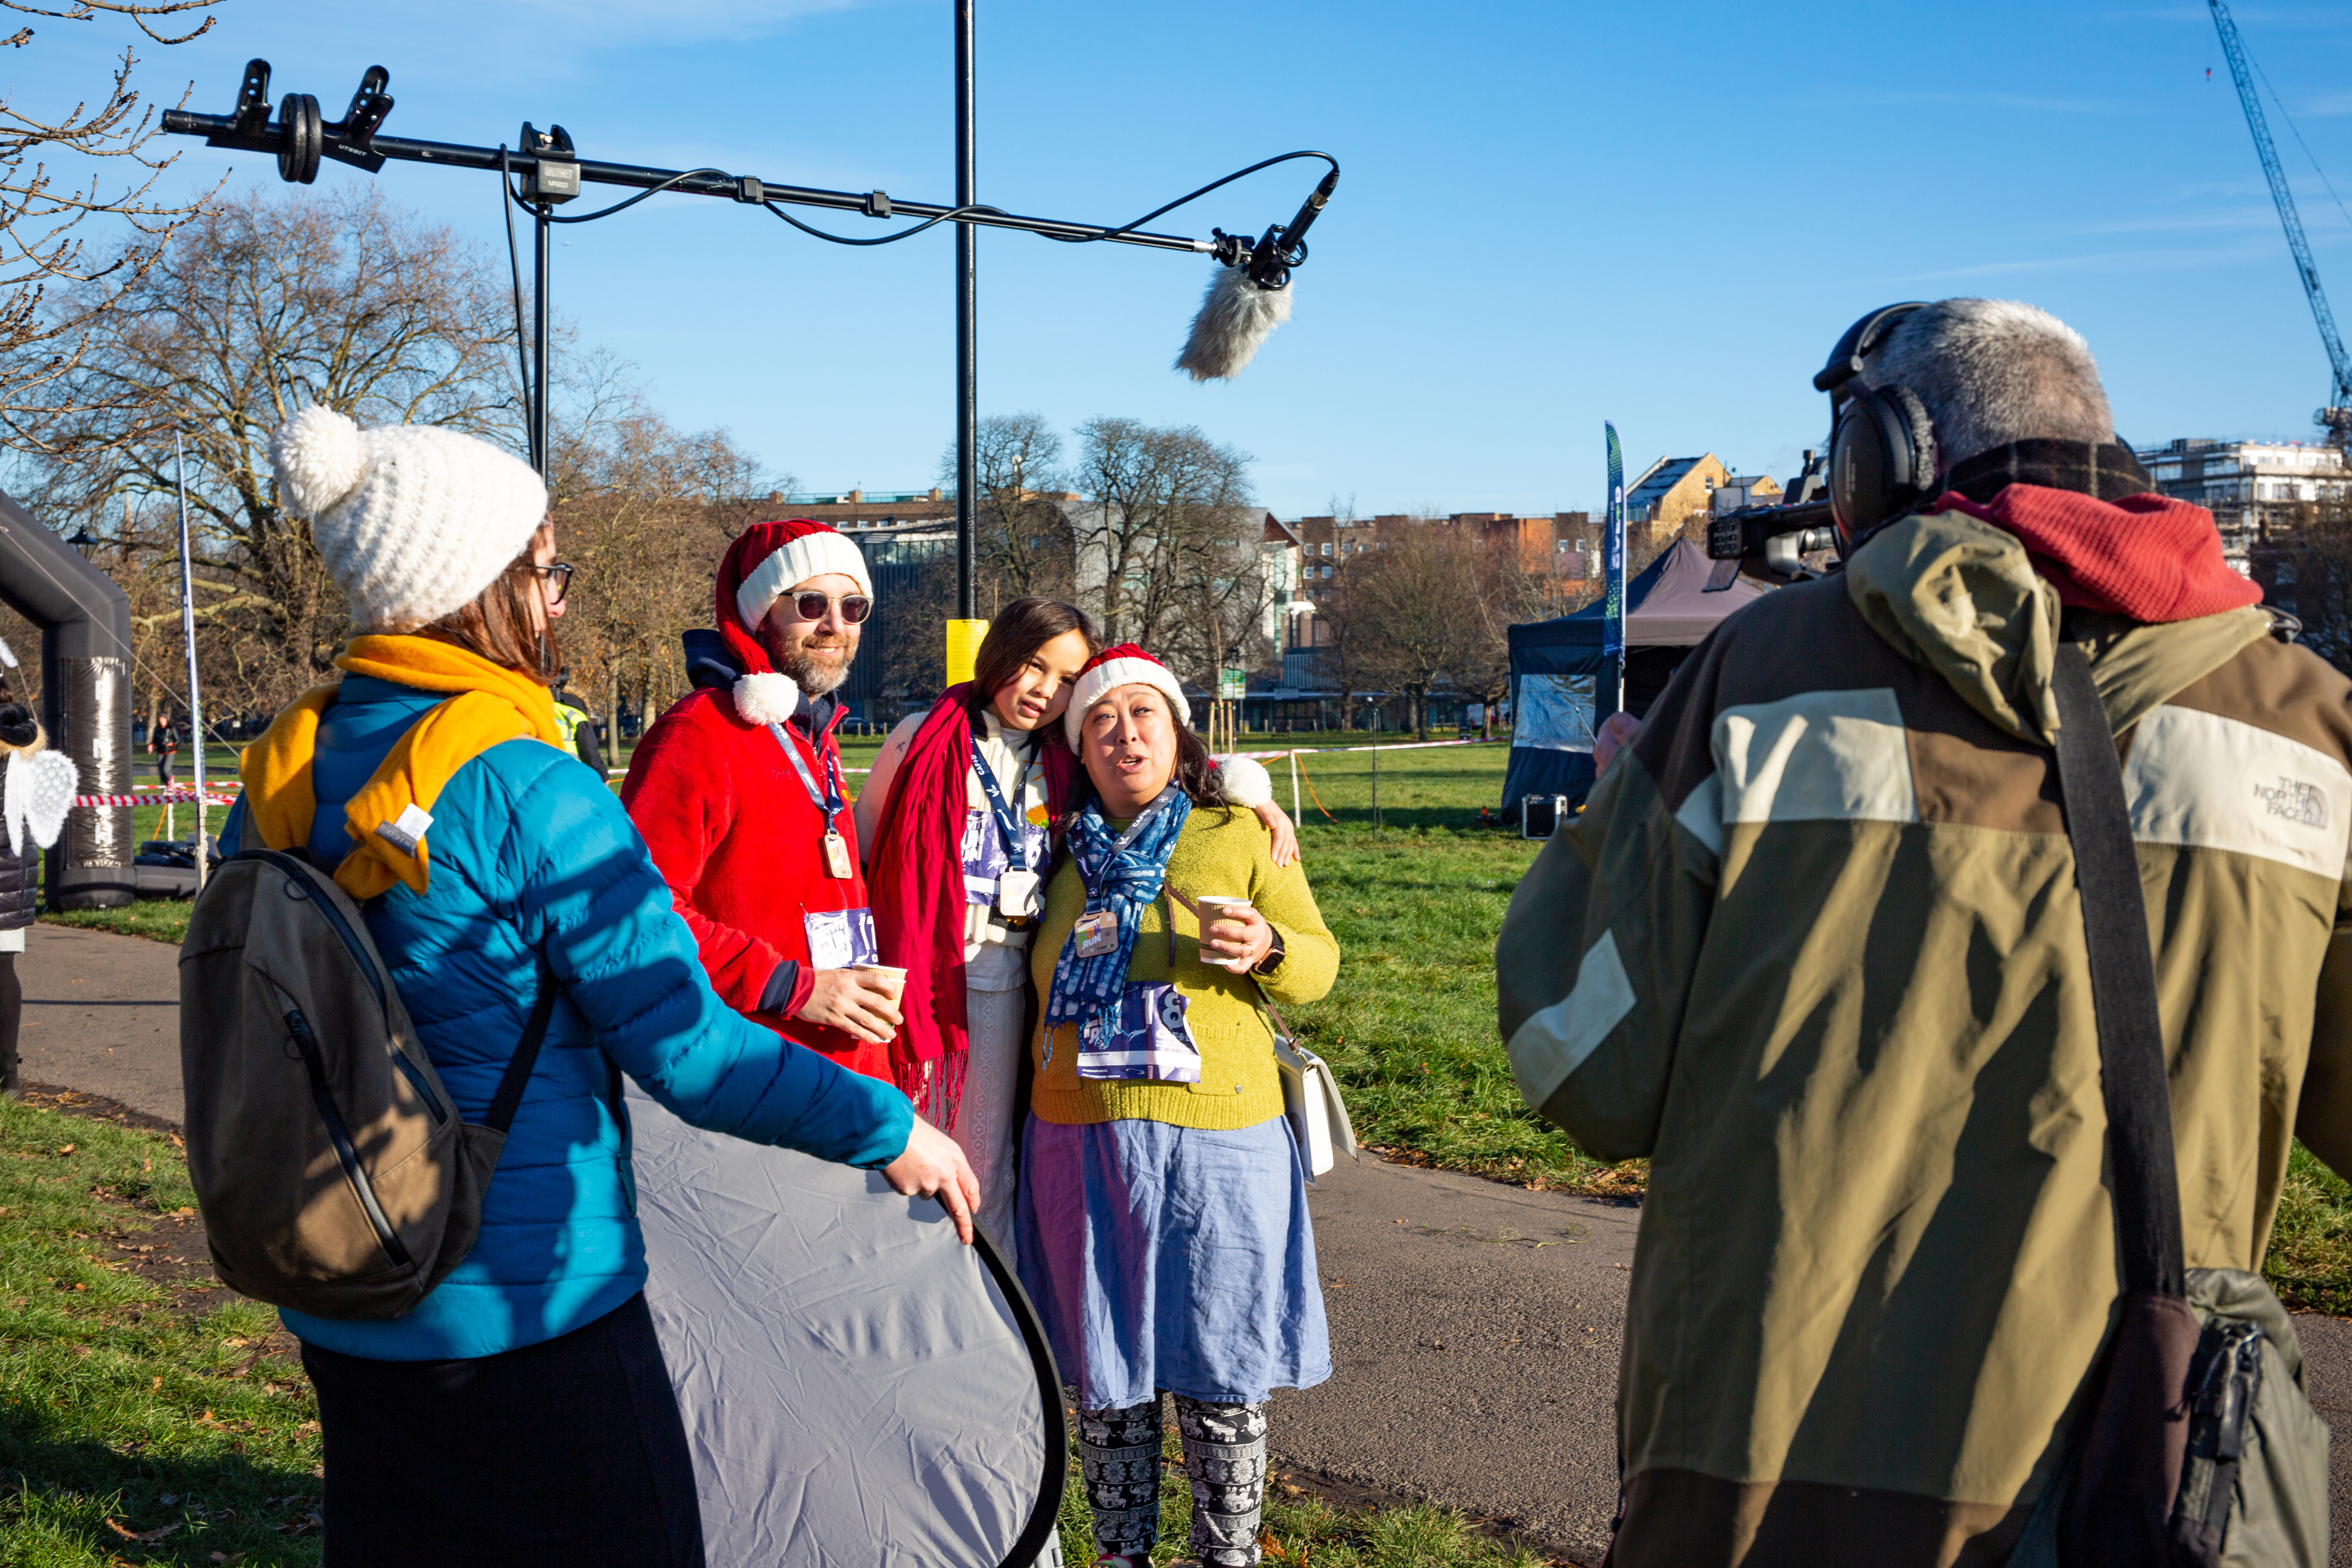 UK - London - Interviewing Nativity run participants